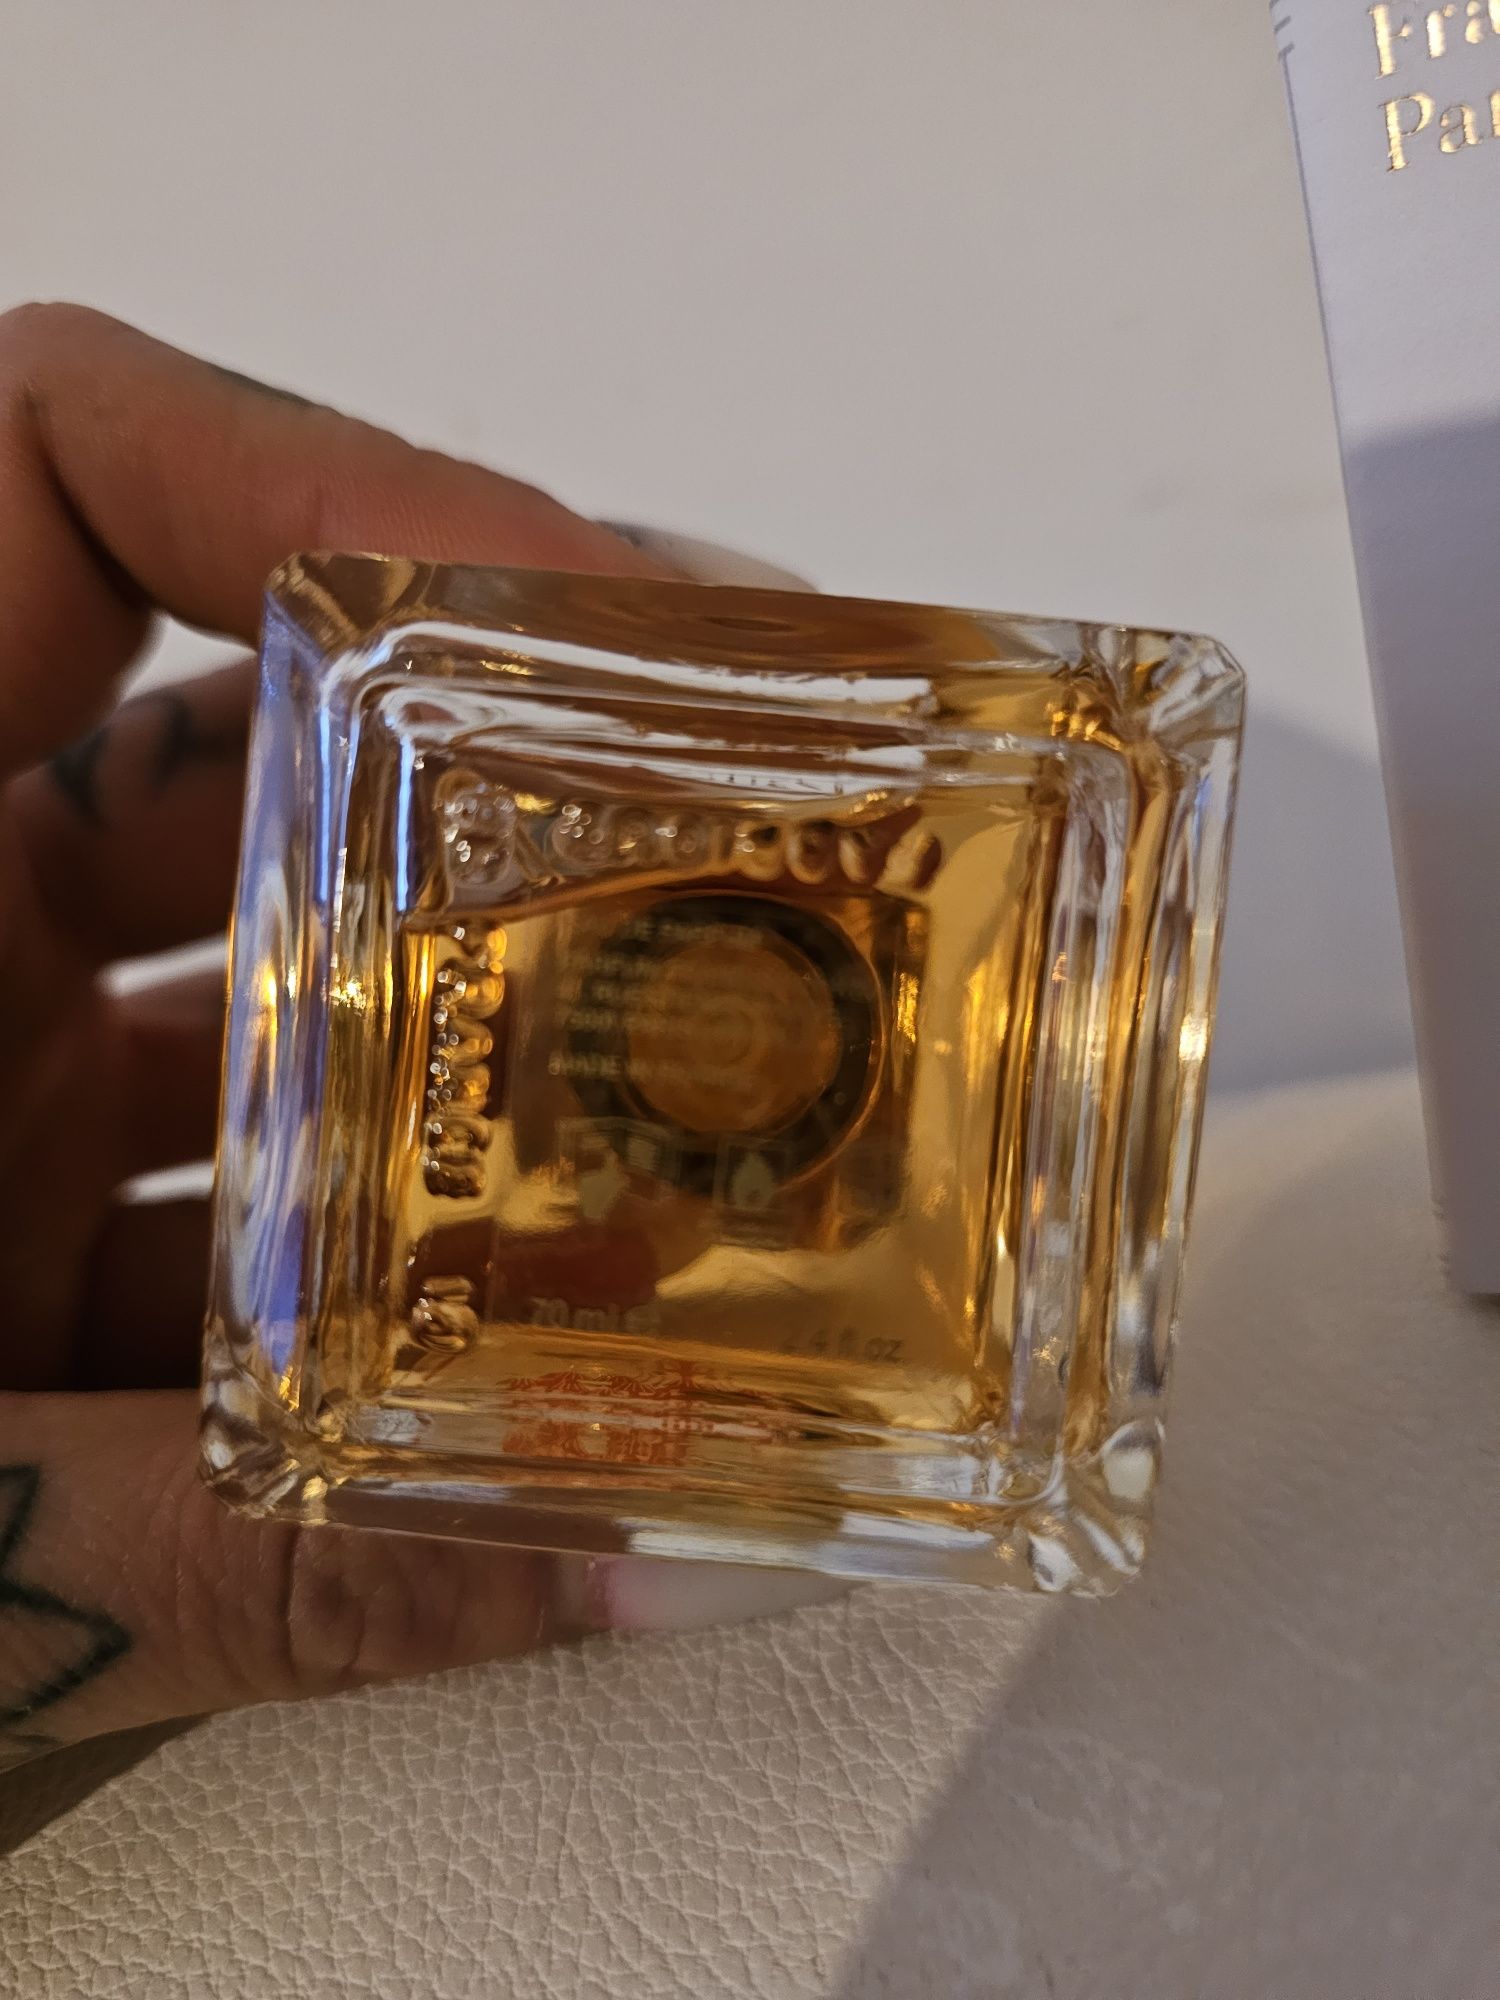 Maison francis kurkdjian baccarat 540 nowe perfumy 70ml